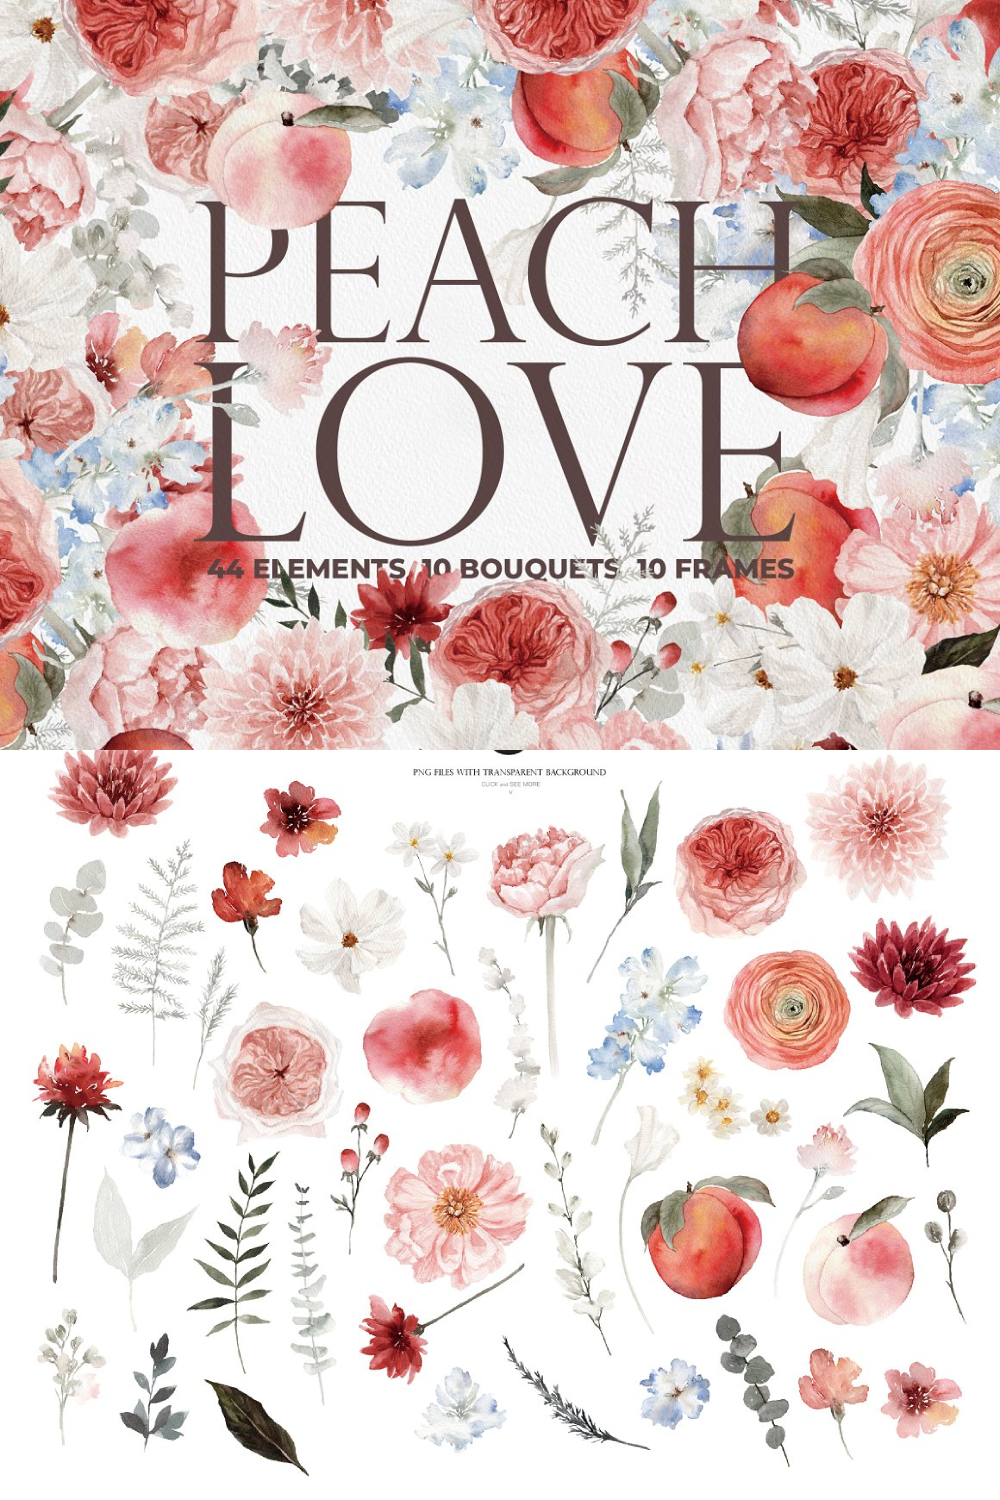 Watercolor Flower - Peach Love - Pinterest.